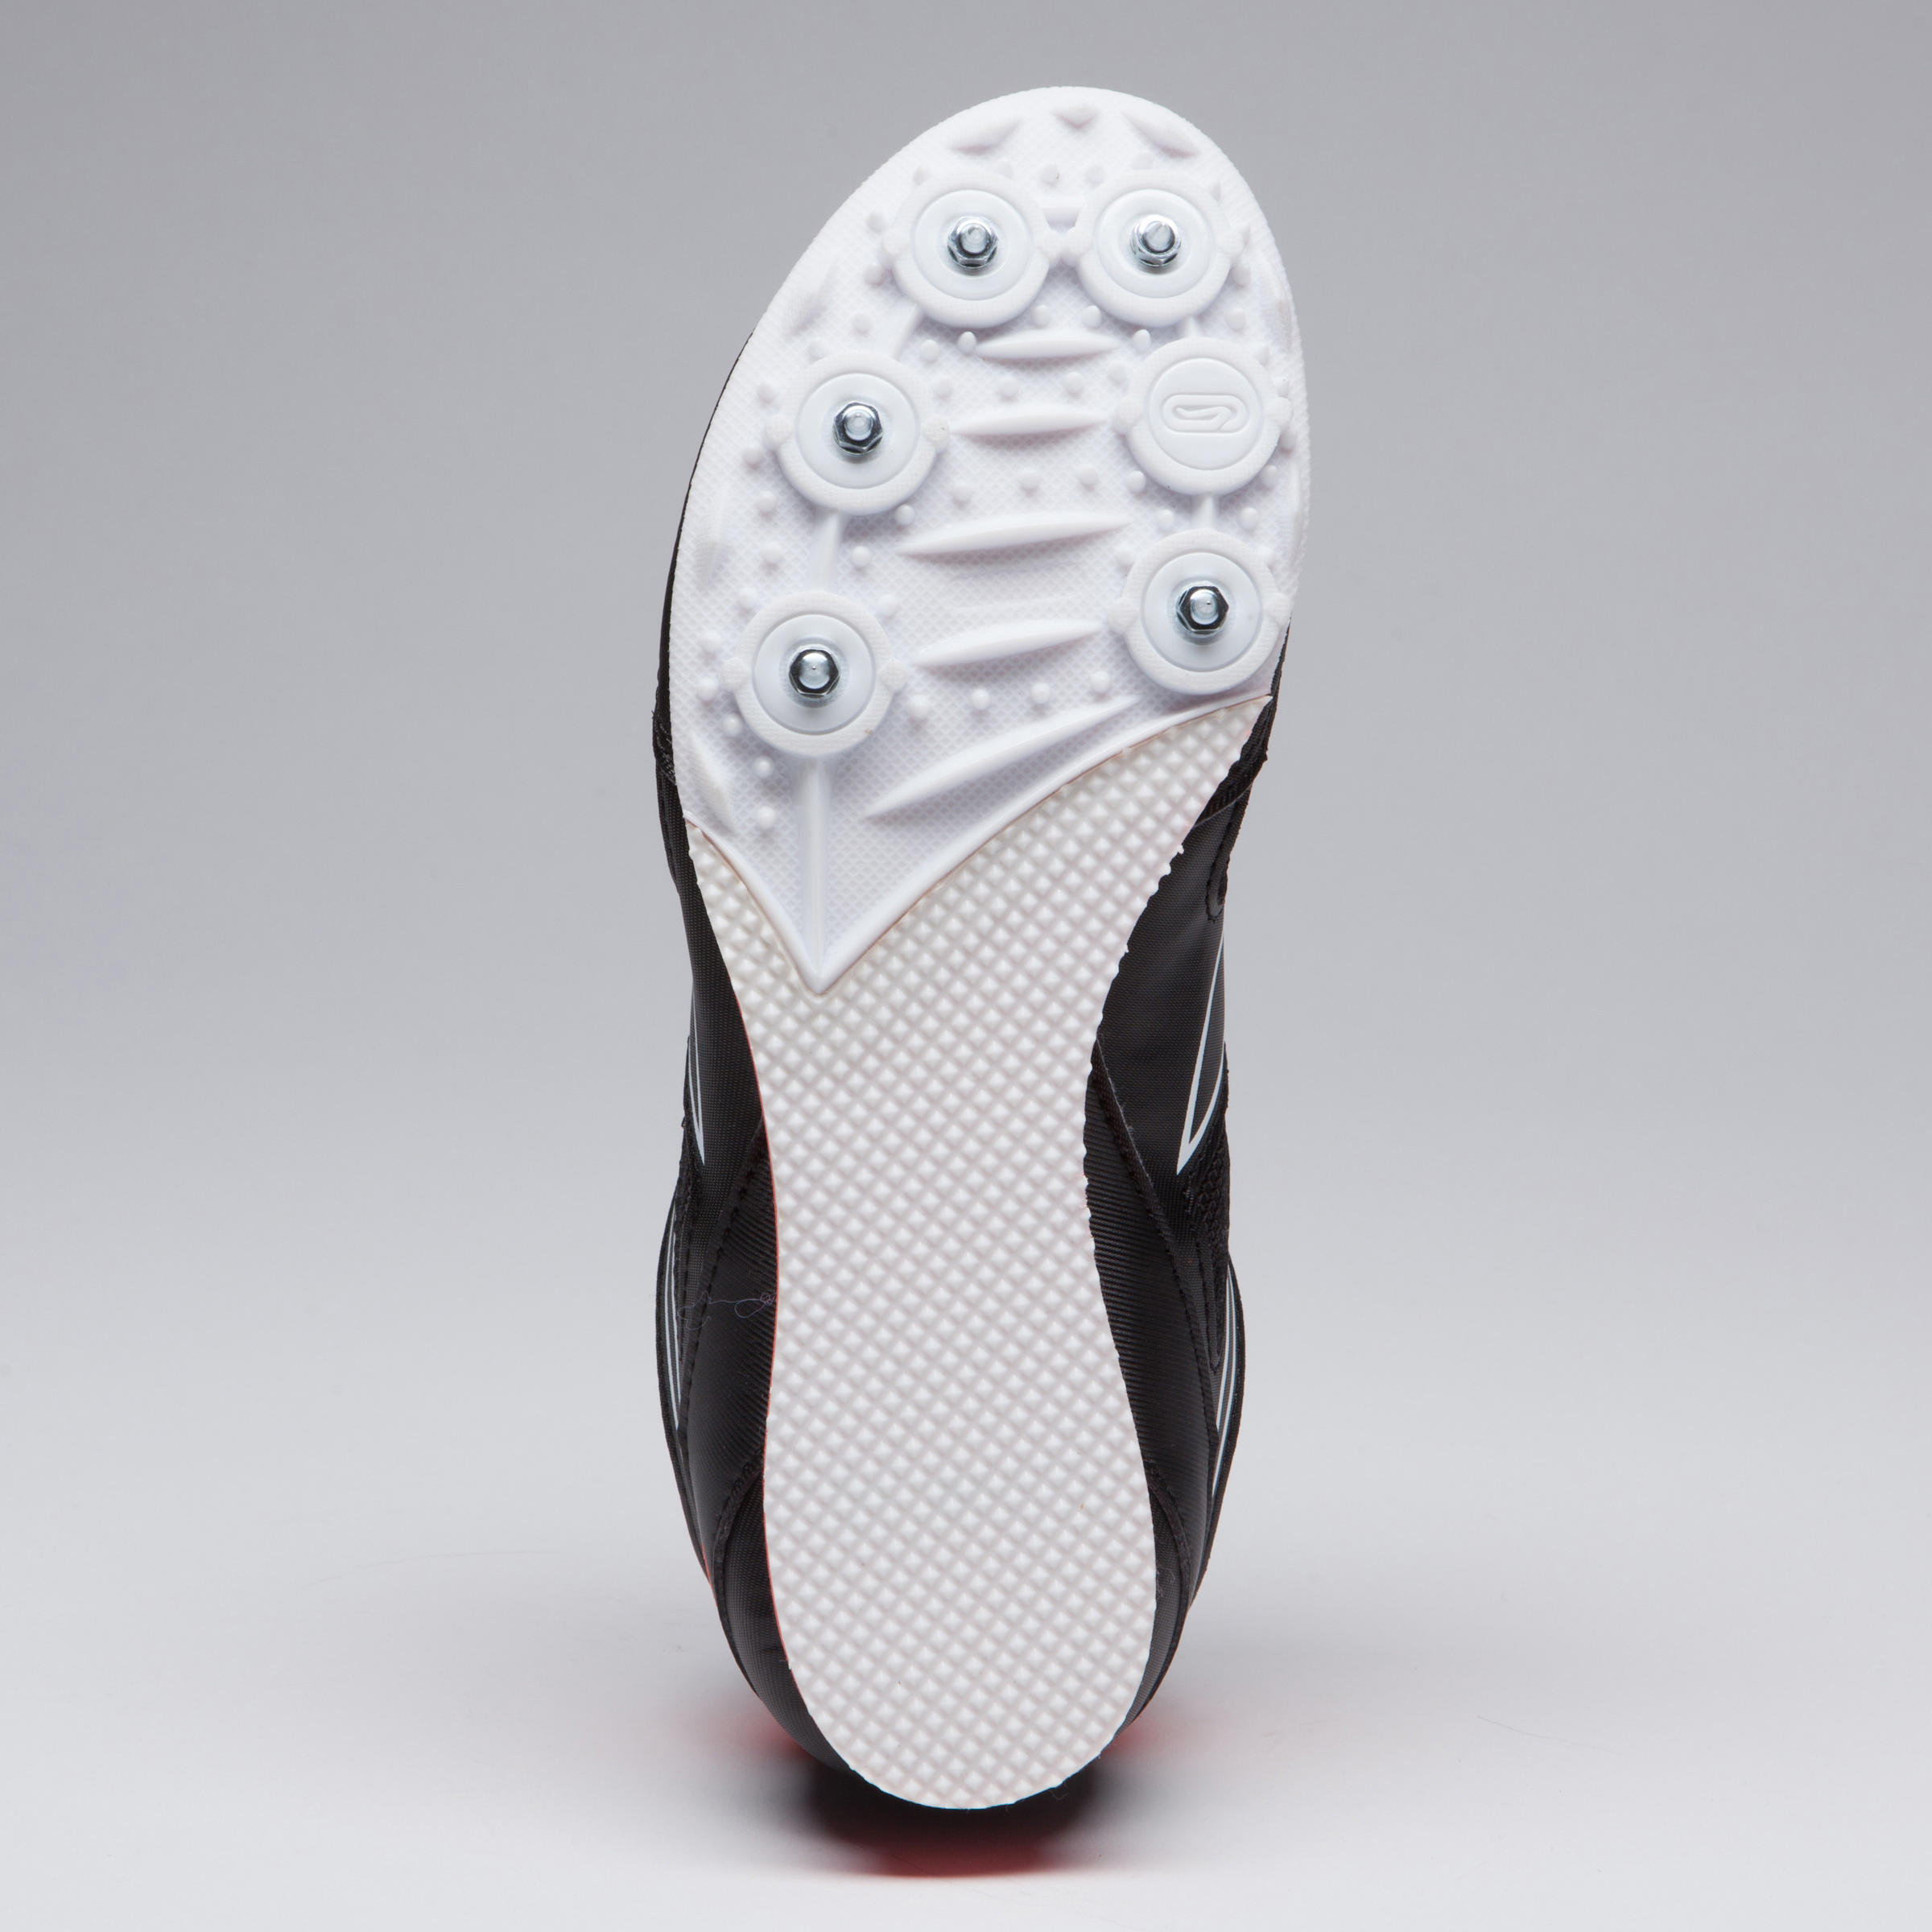 decathlon spike shoes